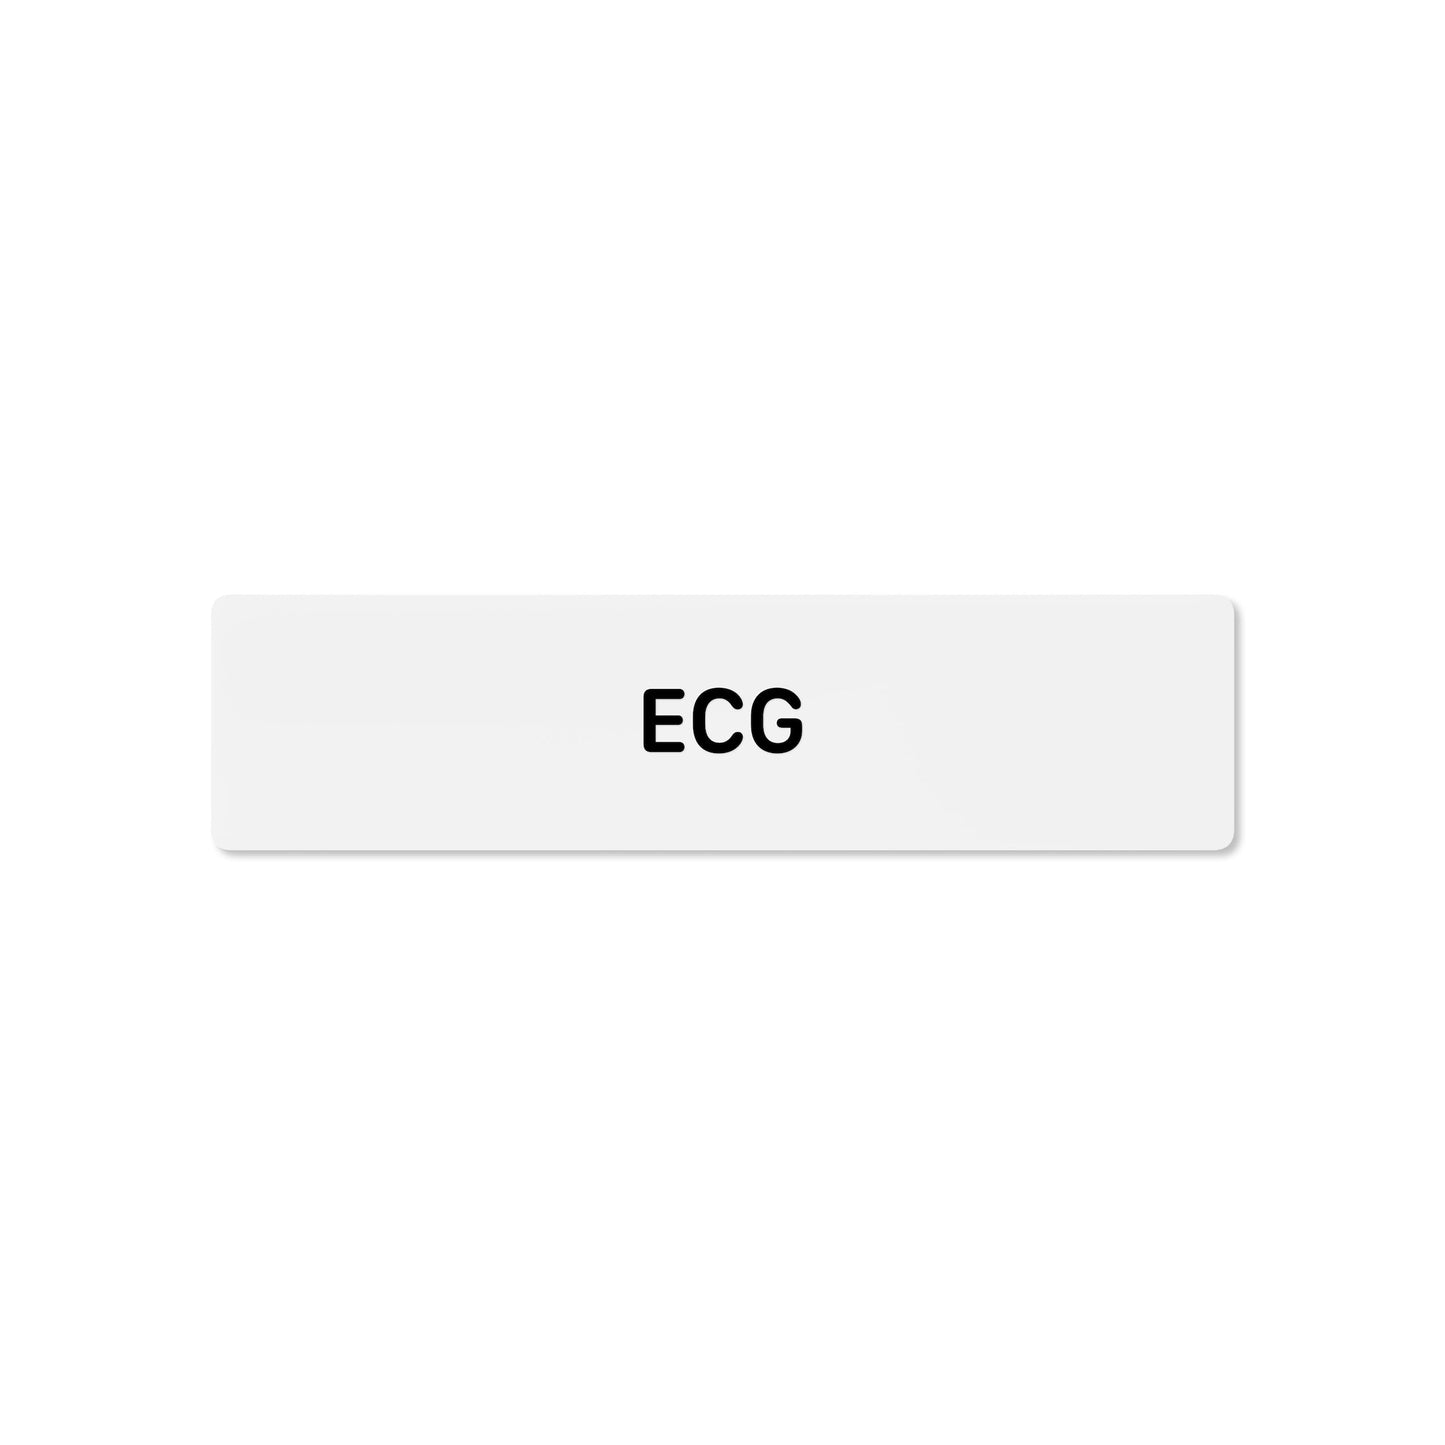 ECG